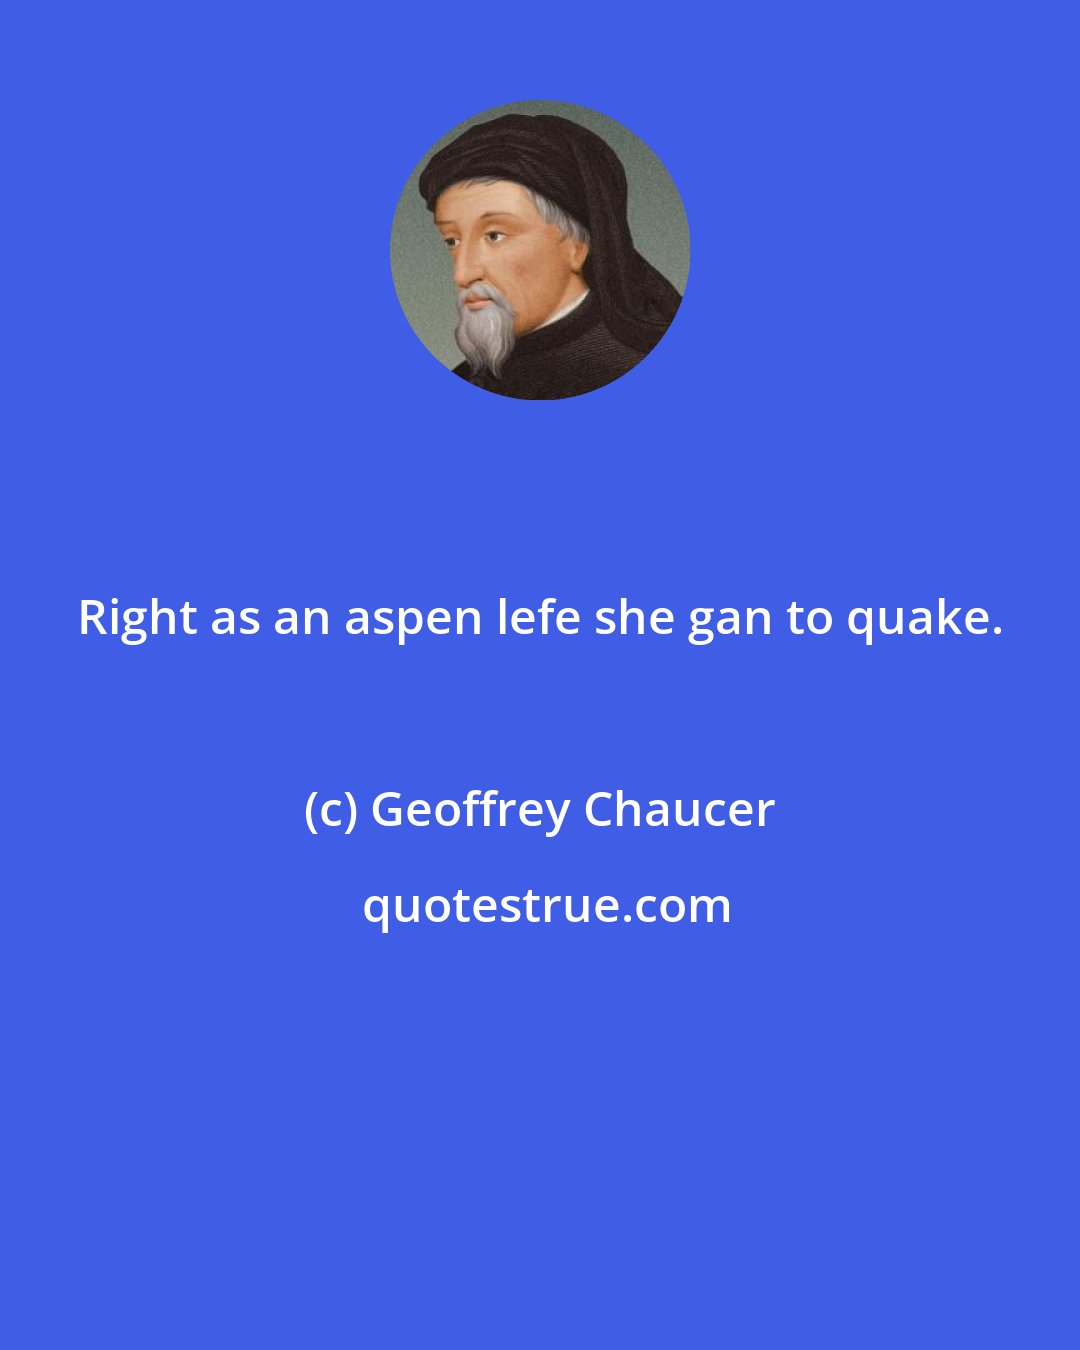 Geoffrey Chaucer: Right as an aspen lefe she gan to quake.